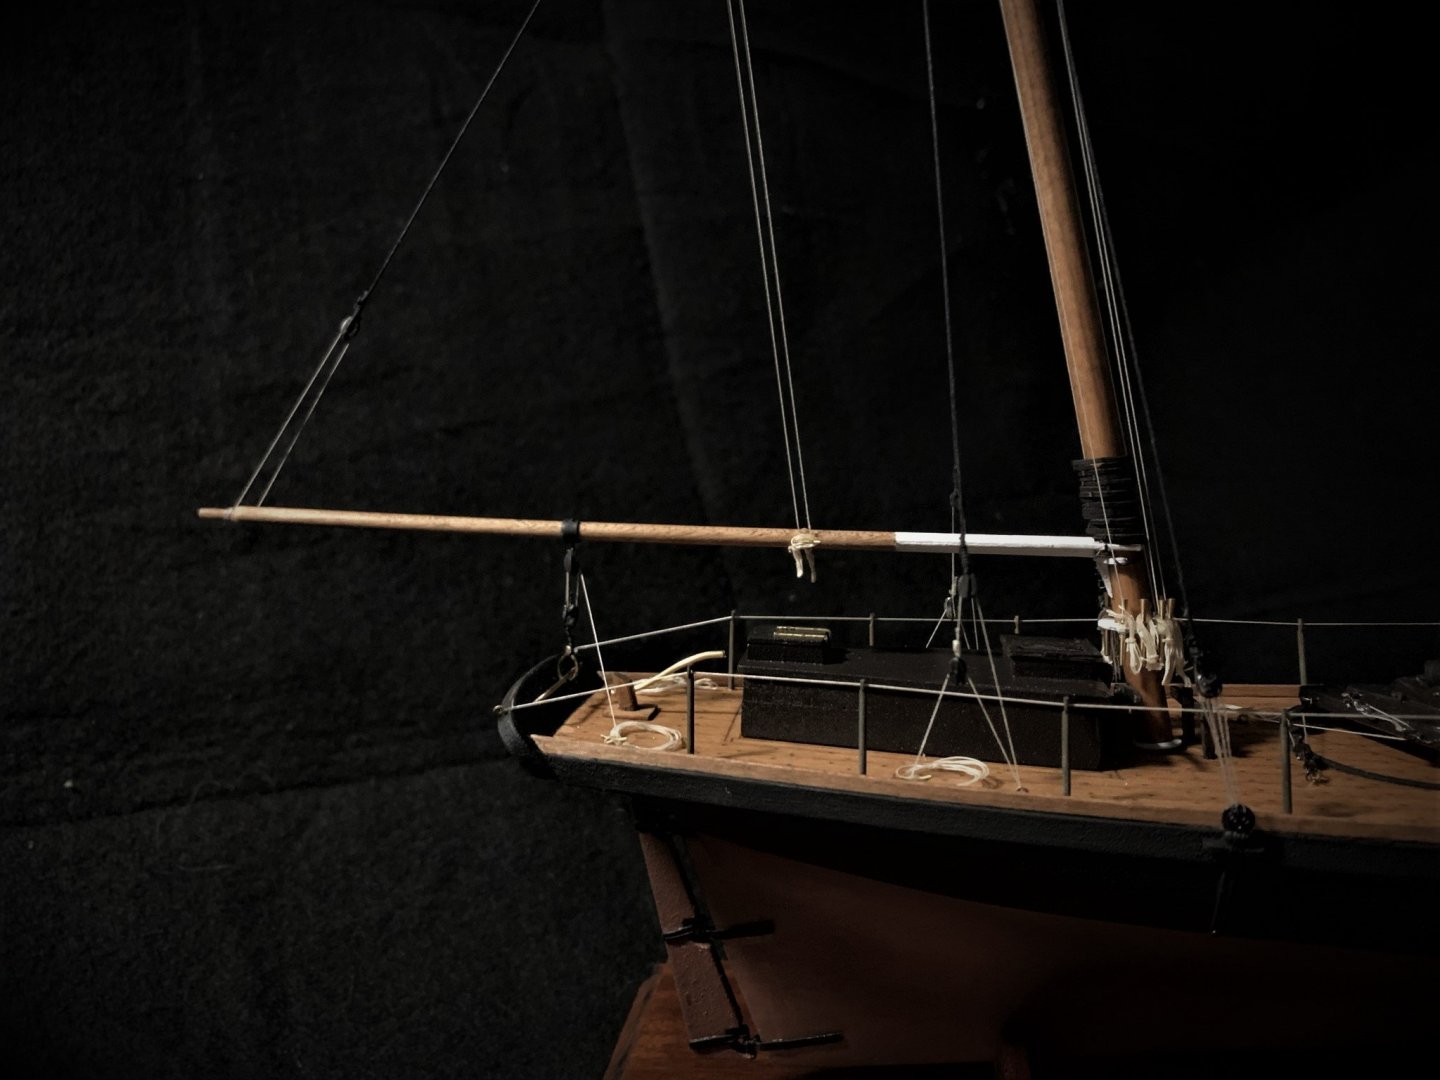 Tweezers Valuable Ship Model Building Tool – The Model Shipwright